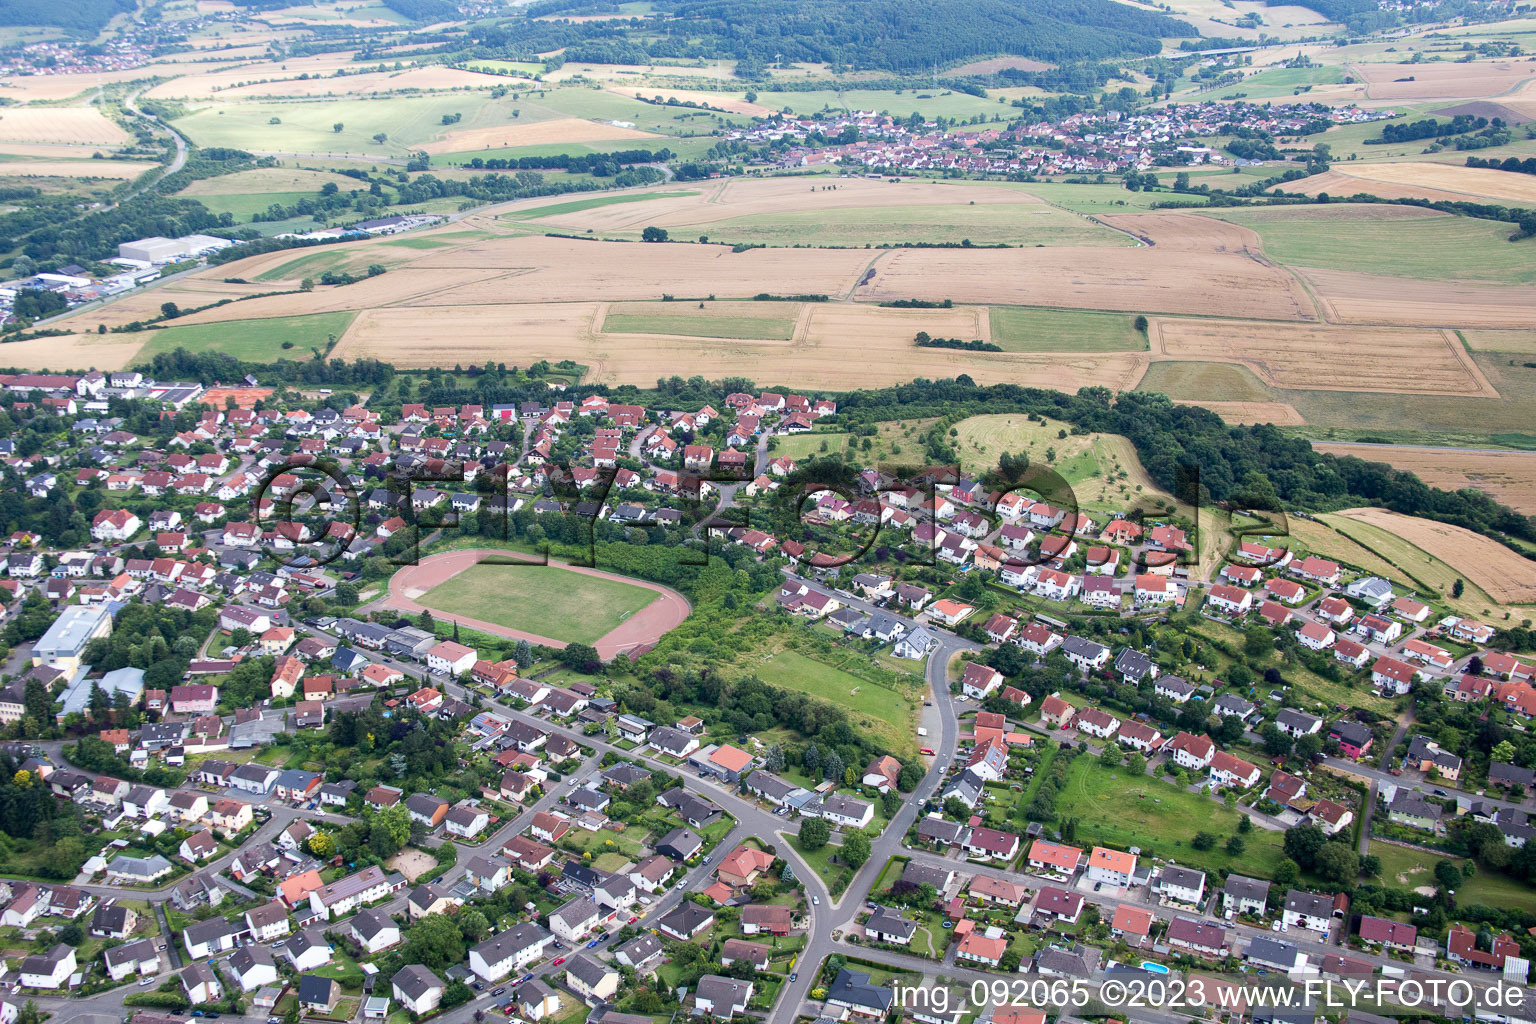 Aerial view of Winnweiler in the state Rhineland-Palatinate, Germany